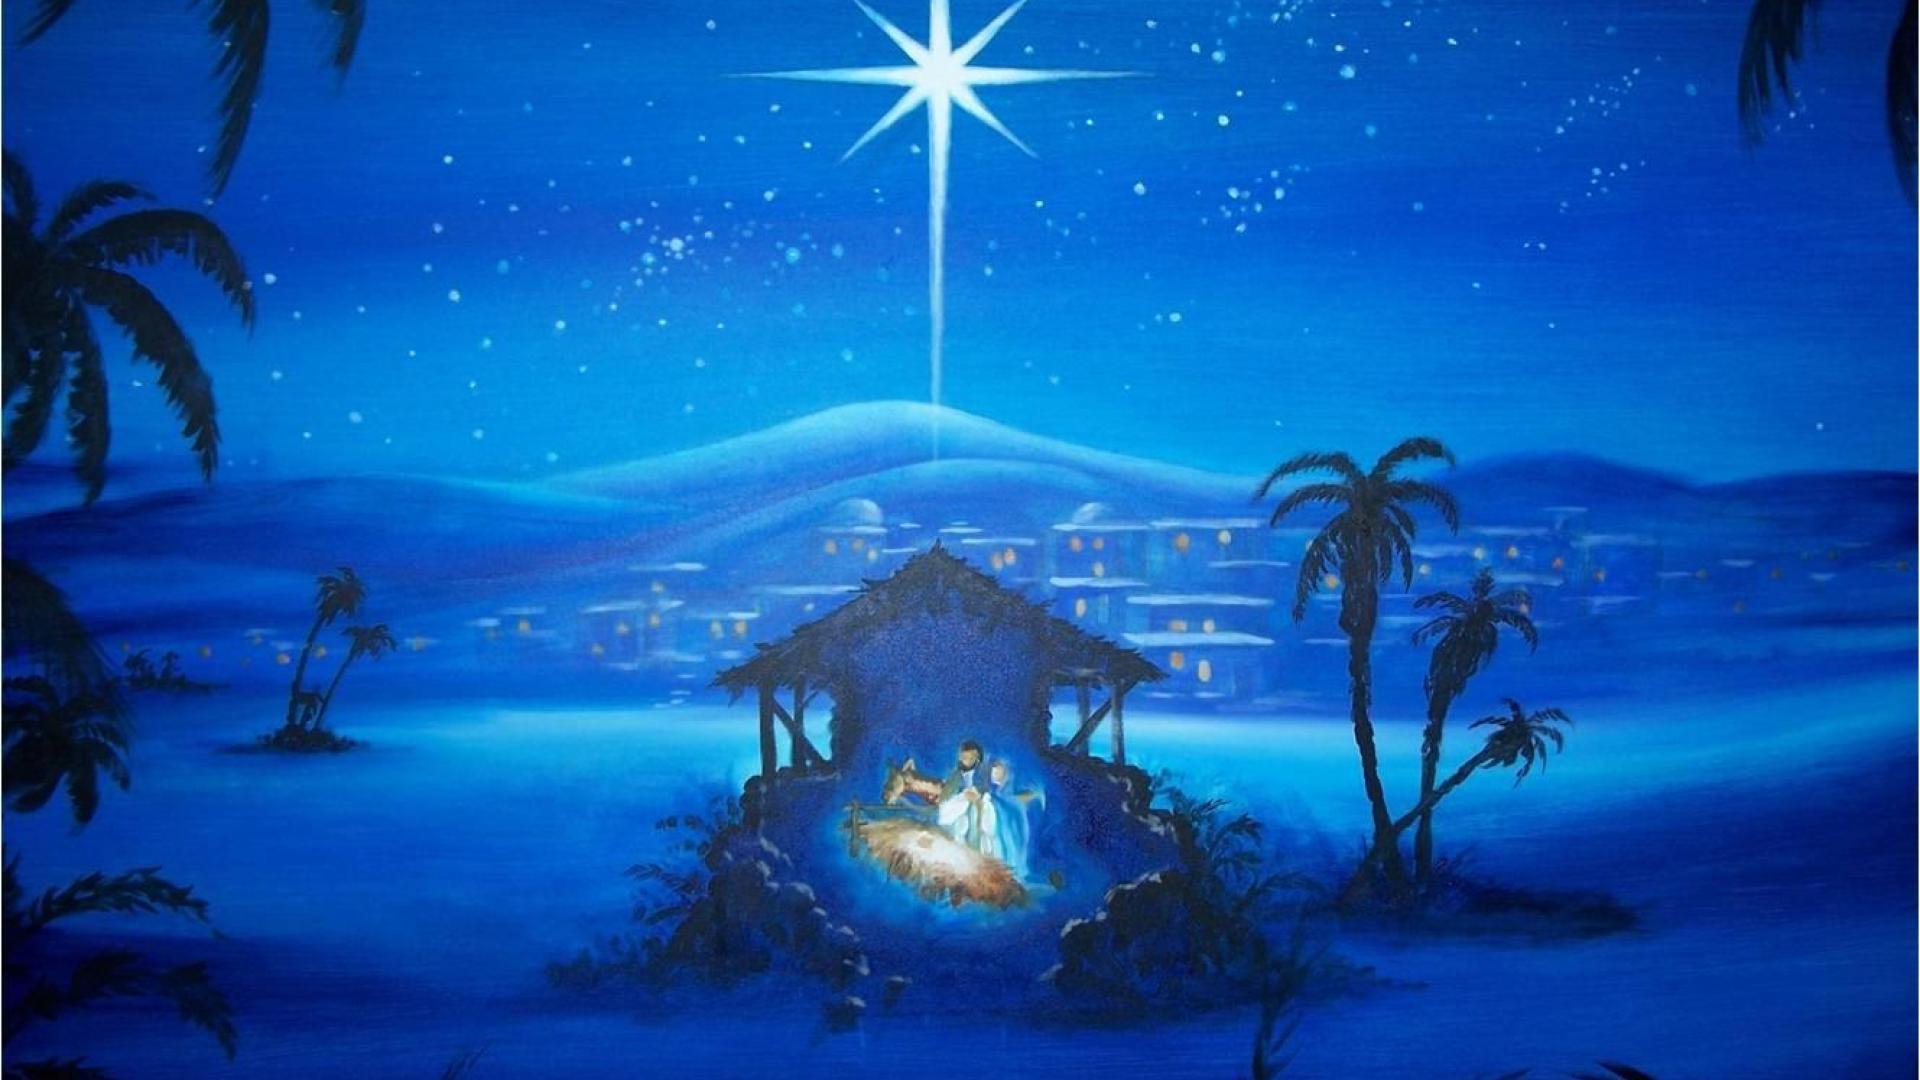 Xmas Stuff For > Christmas Nativity Painting